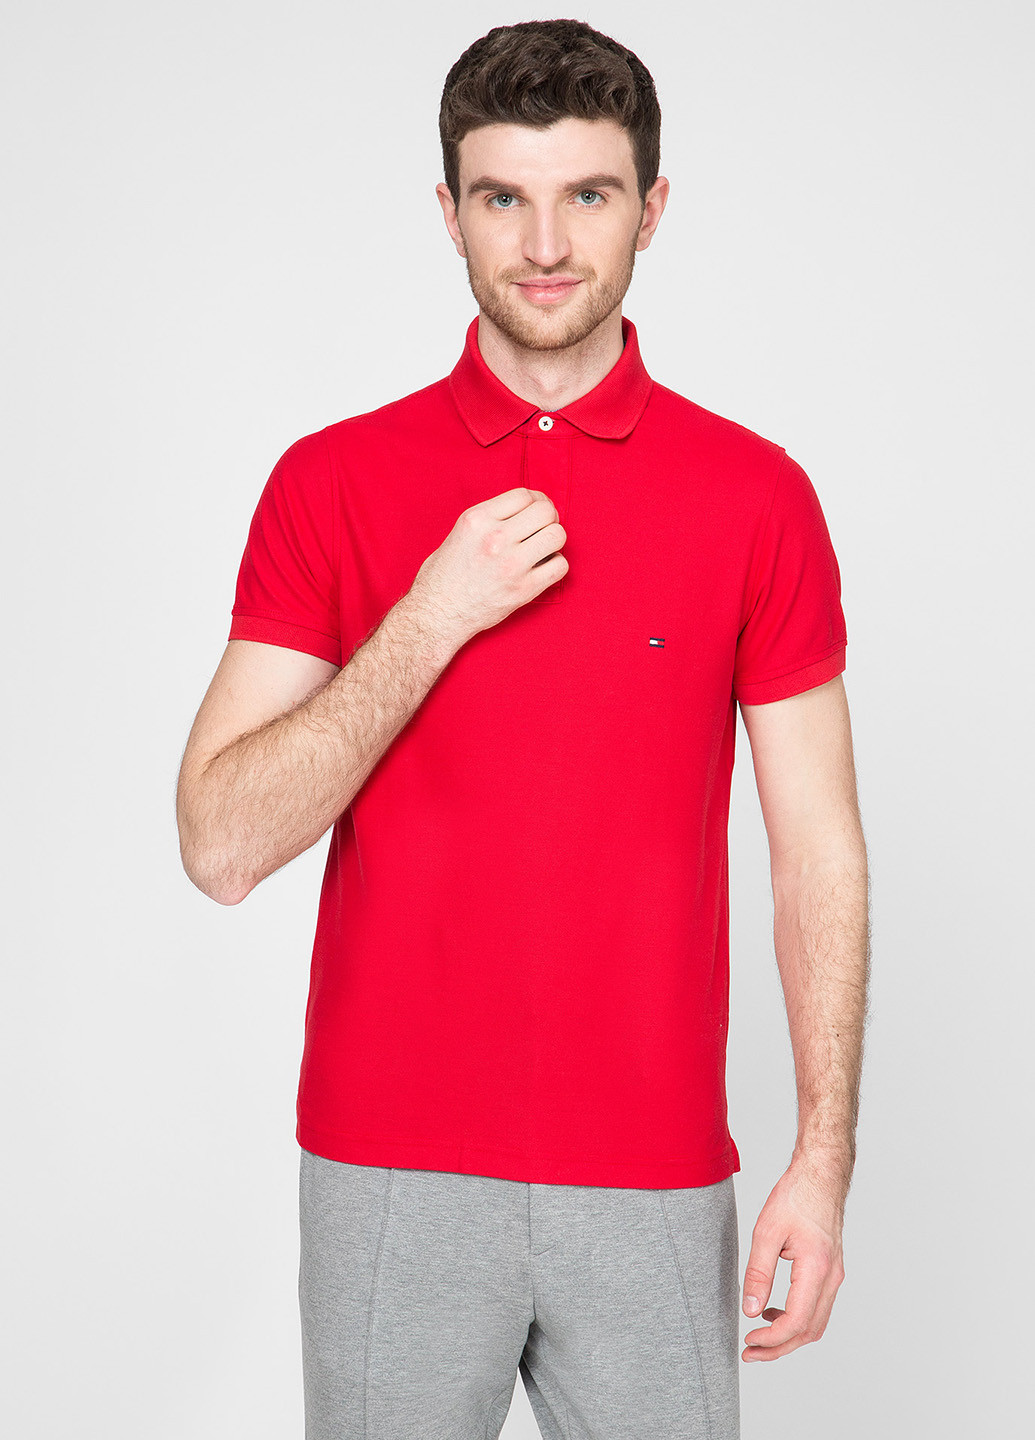 Красная футболка-поло для мужчин Tommy Hilfiger однотонная